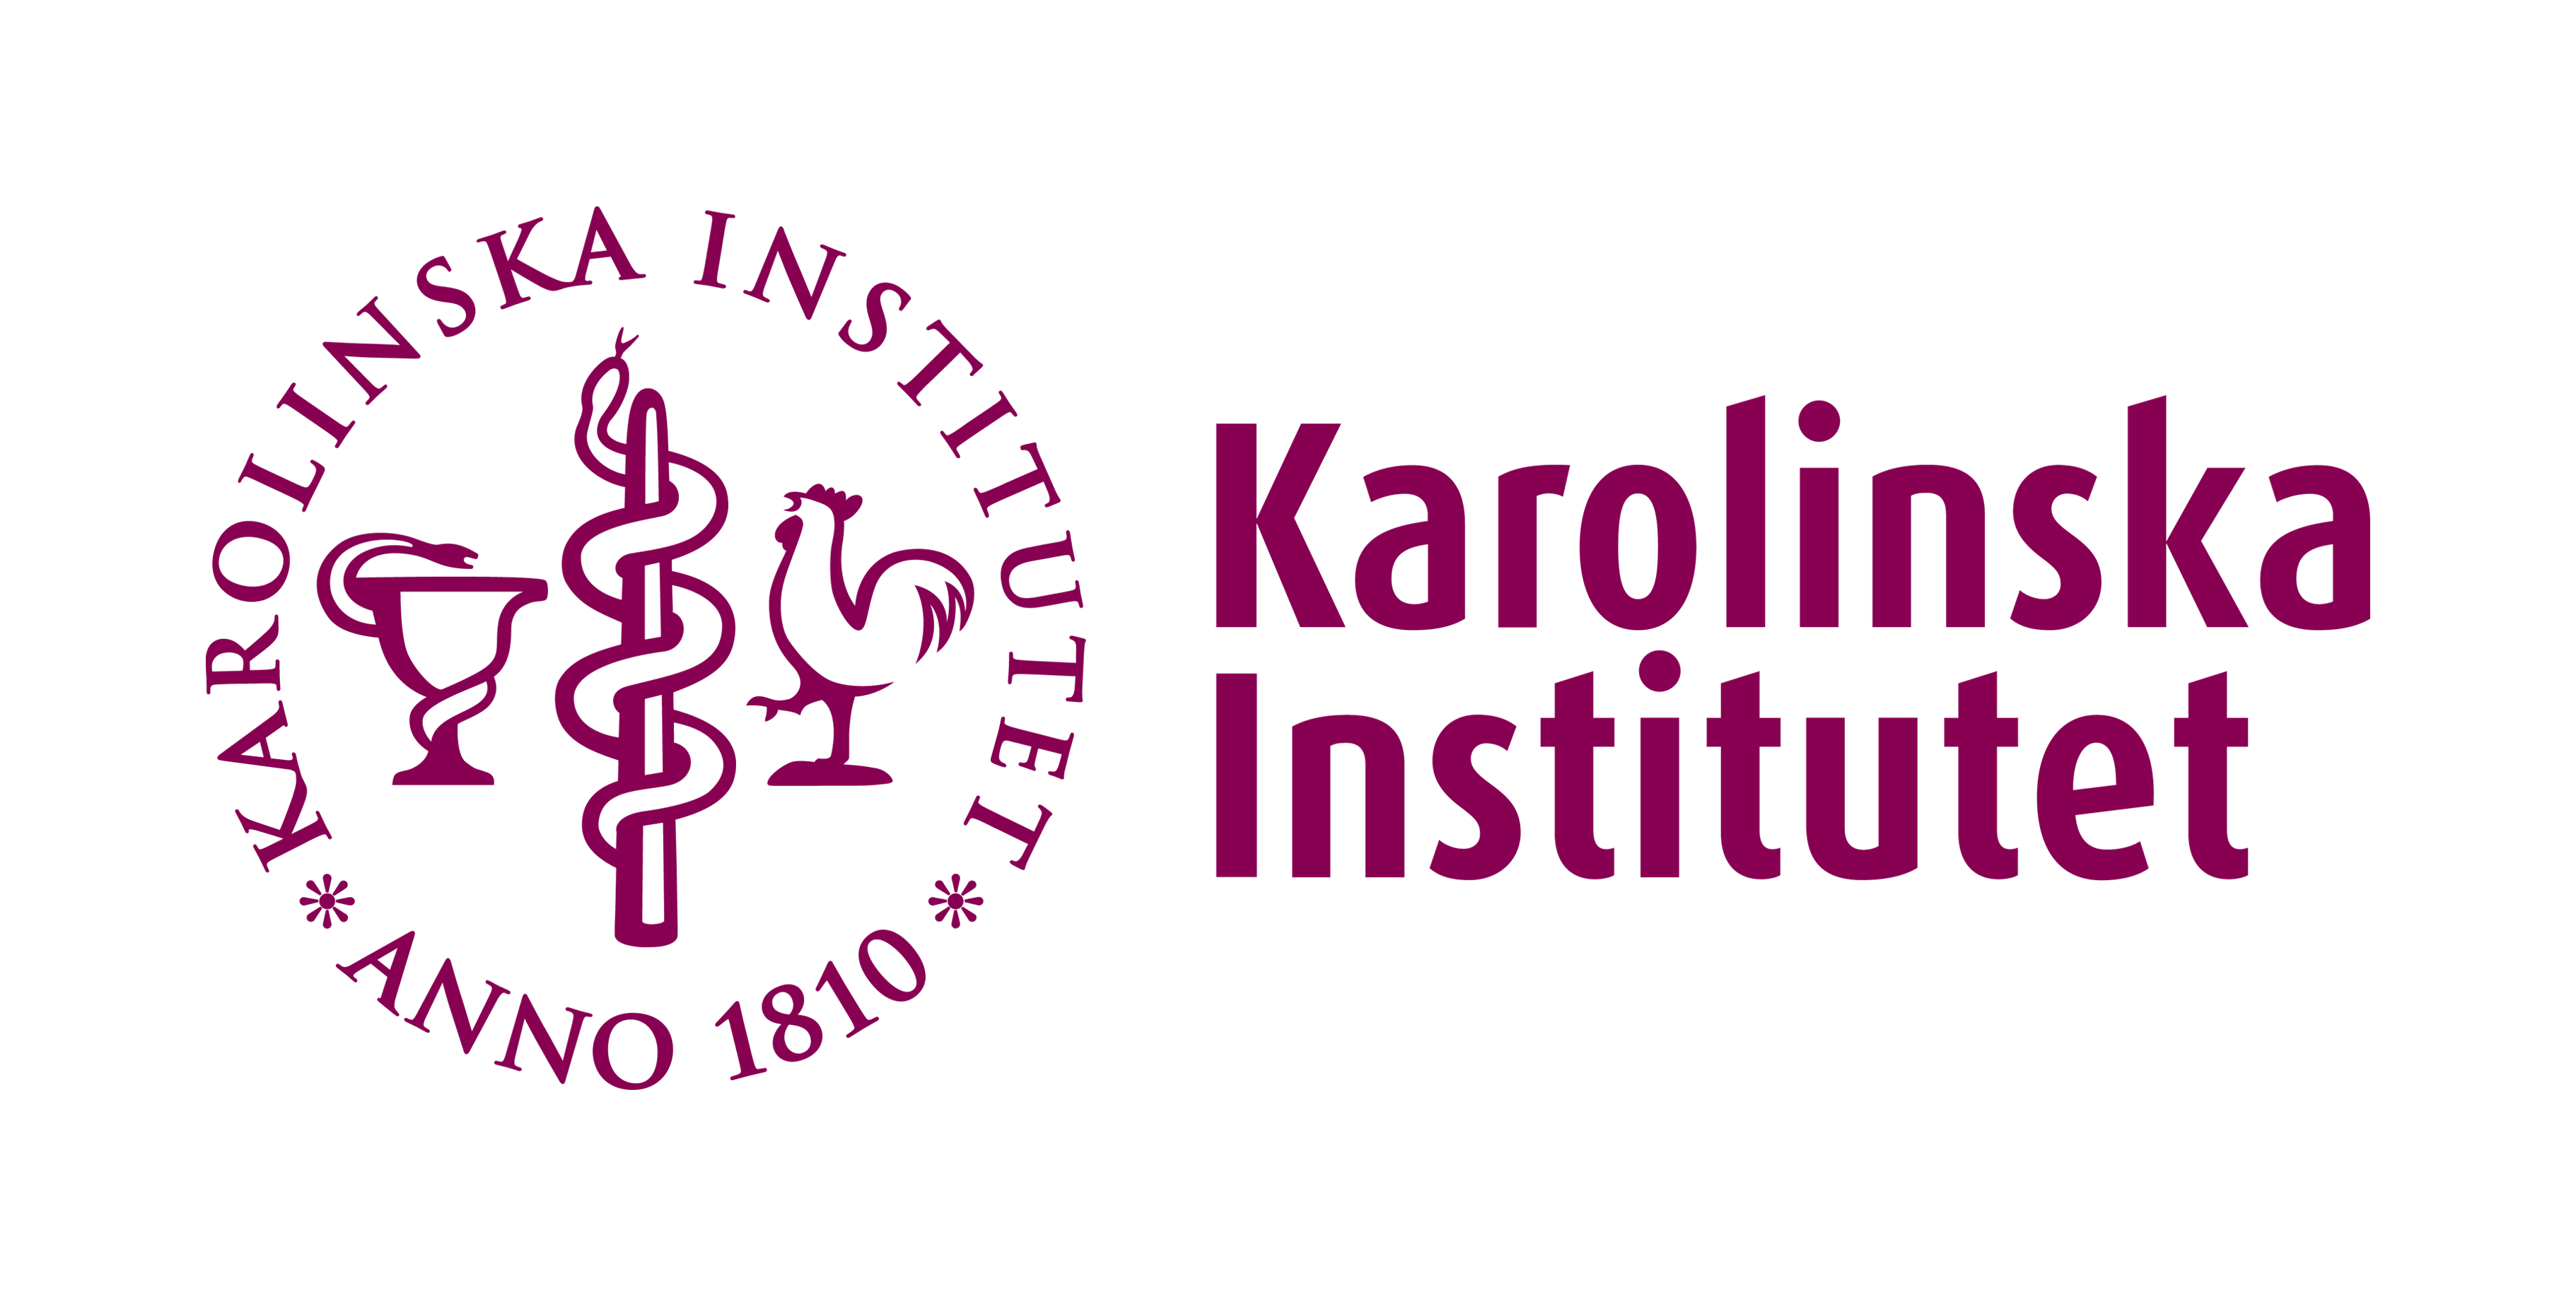 Karolinska institutet's logotype